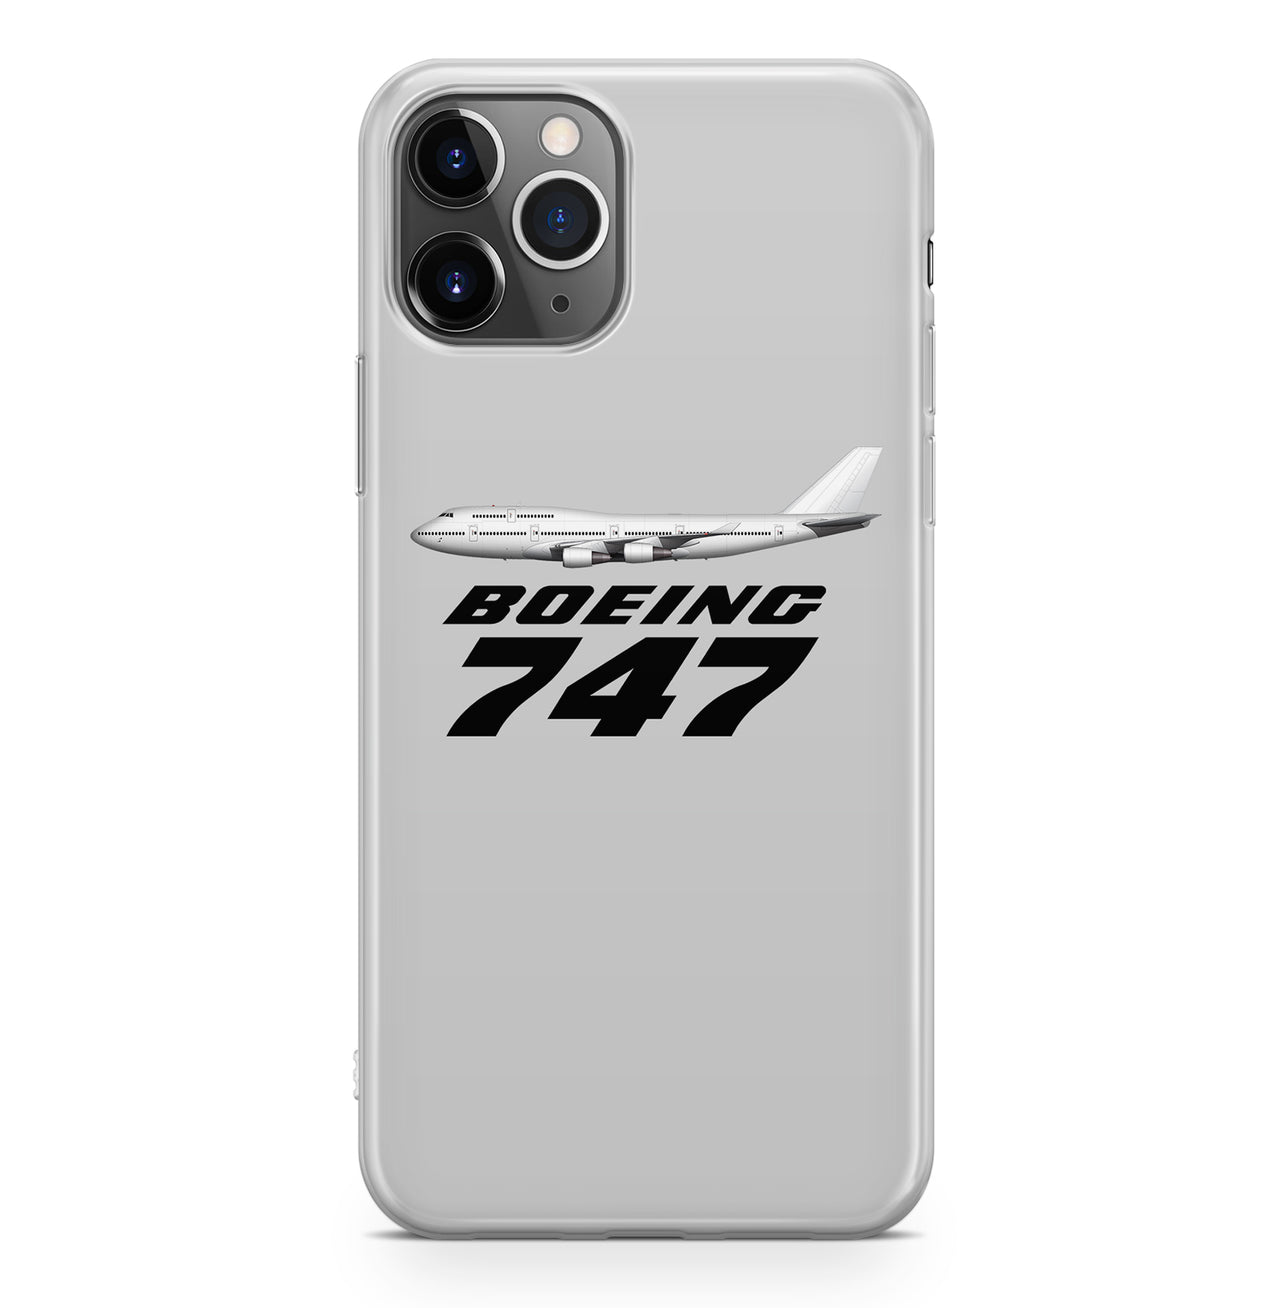 The Boeing 747 Designed iPhone Cases